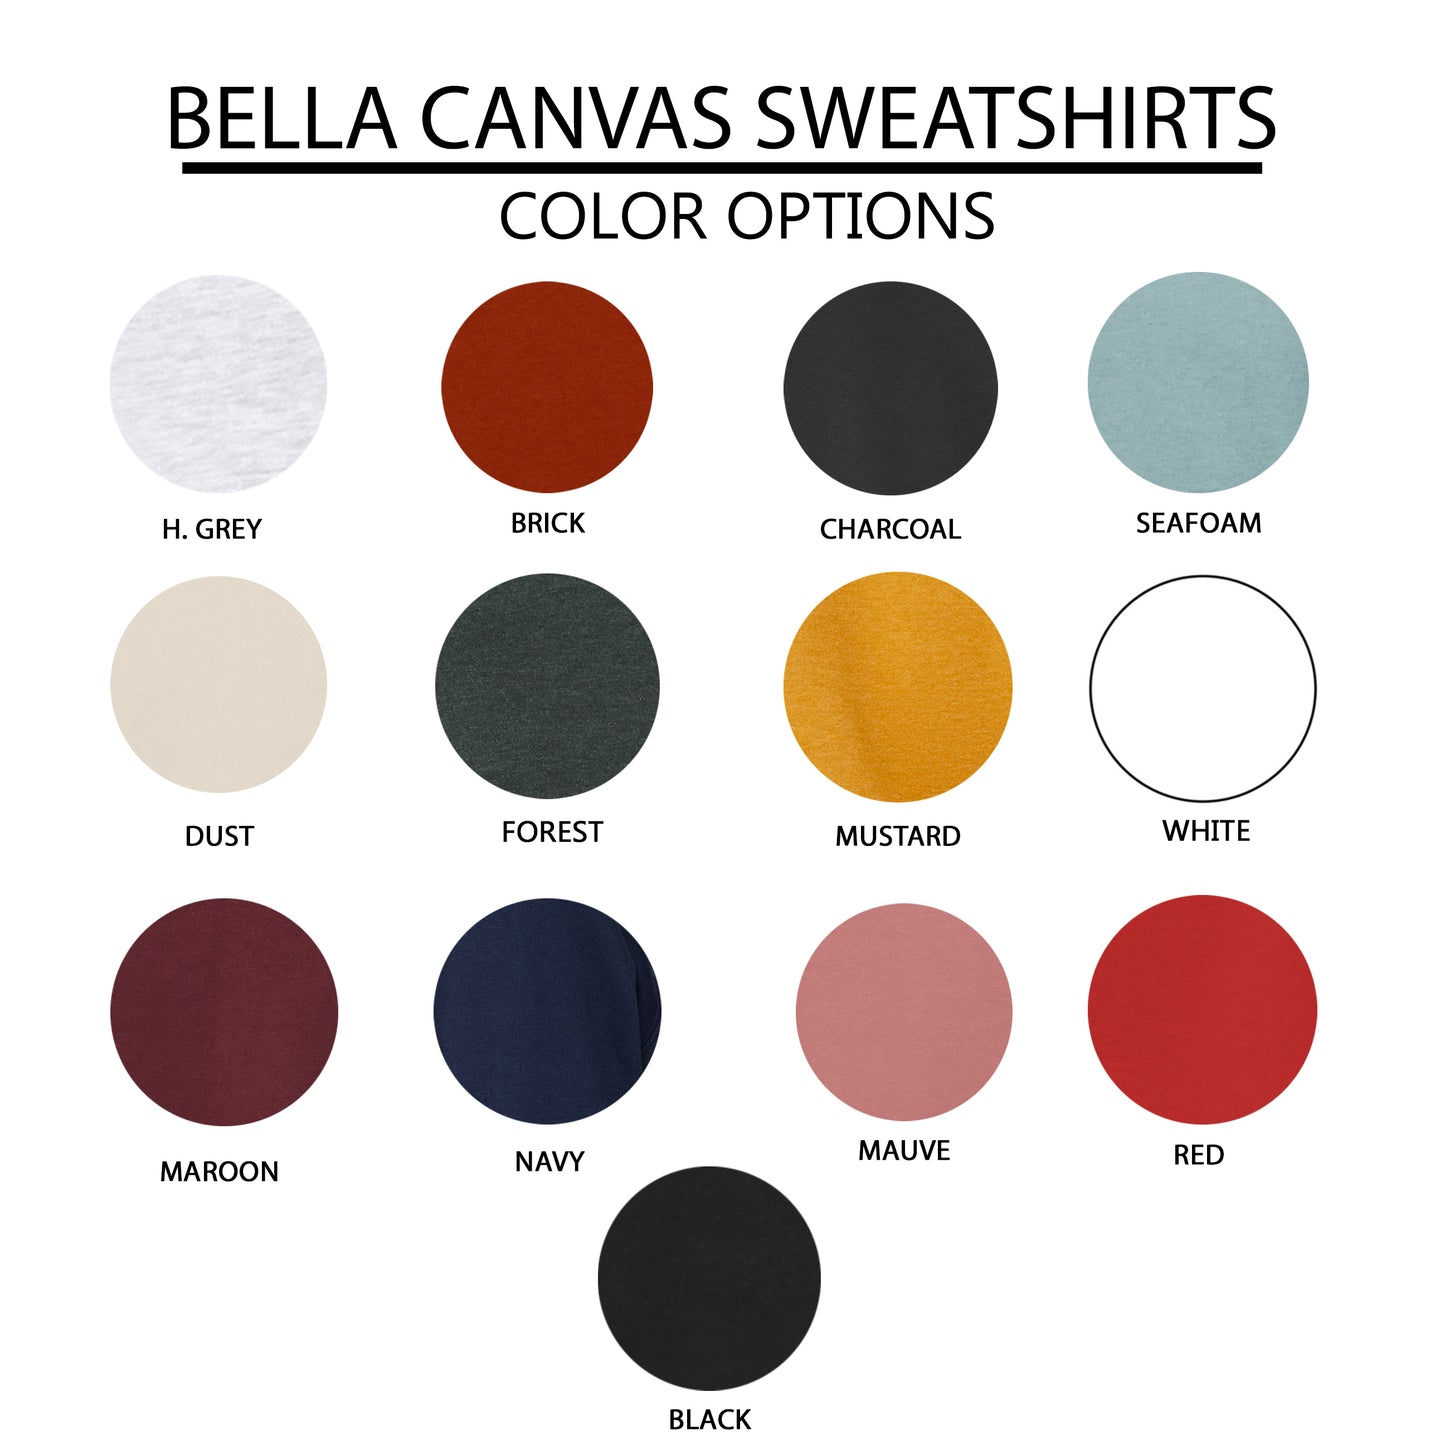 Be The Good In The World | Bella Canvas Premium Sweatshirt